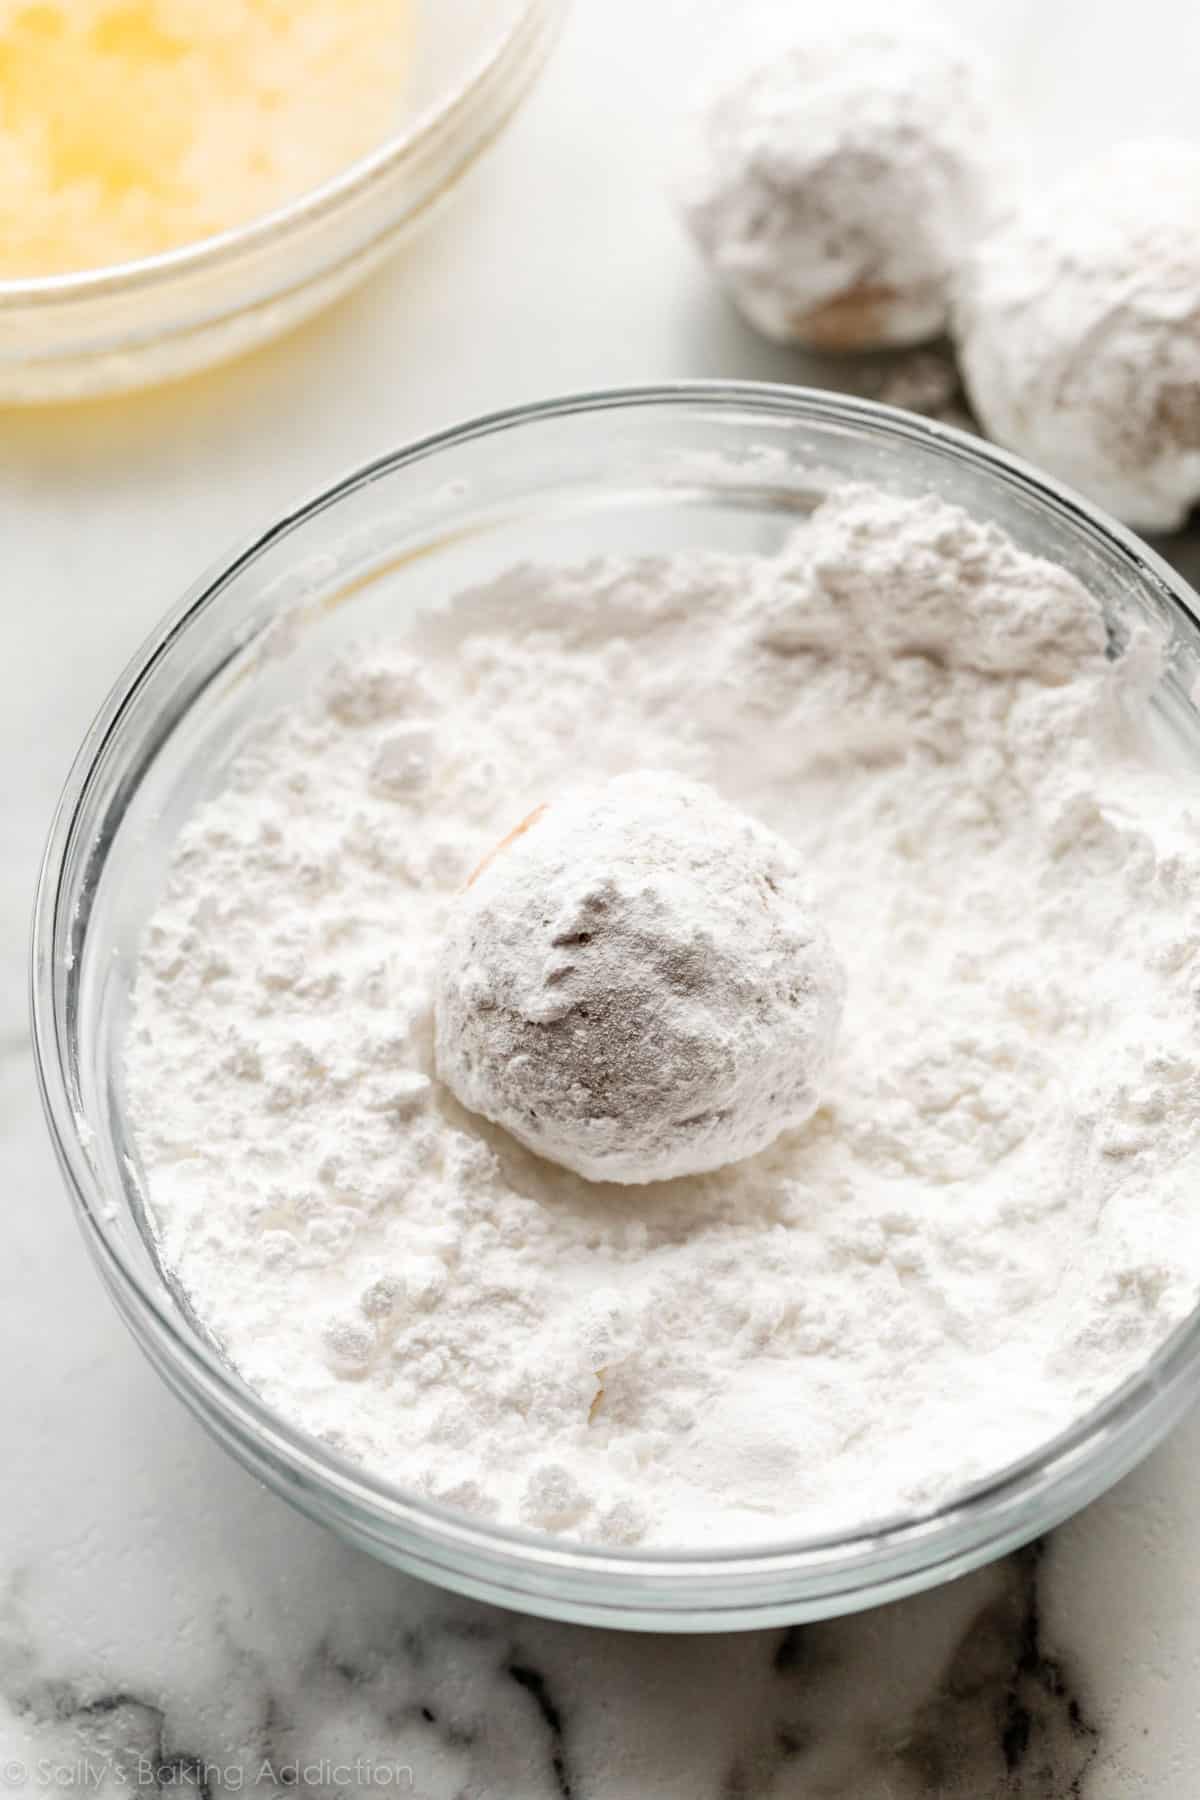 rolling mini donut-style muffin in powdered sugar